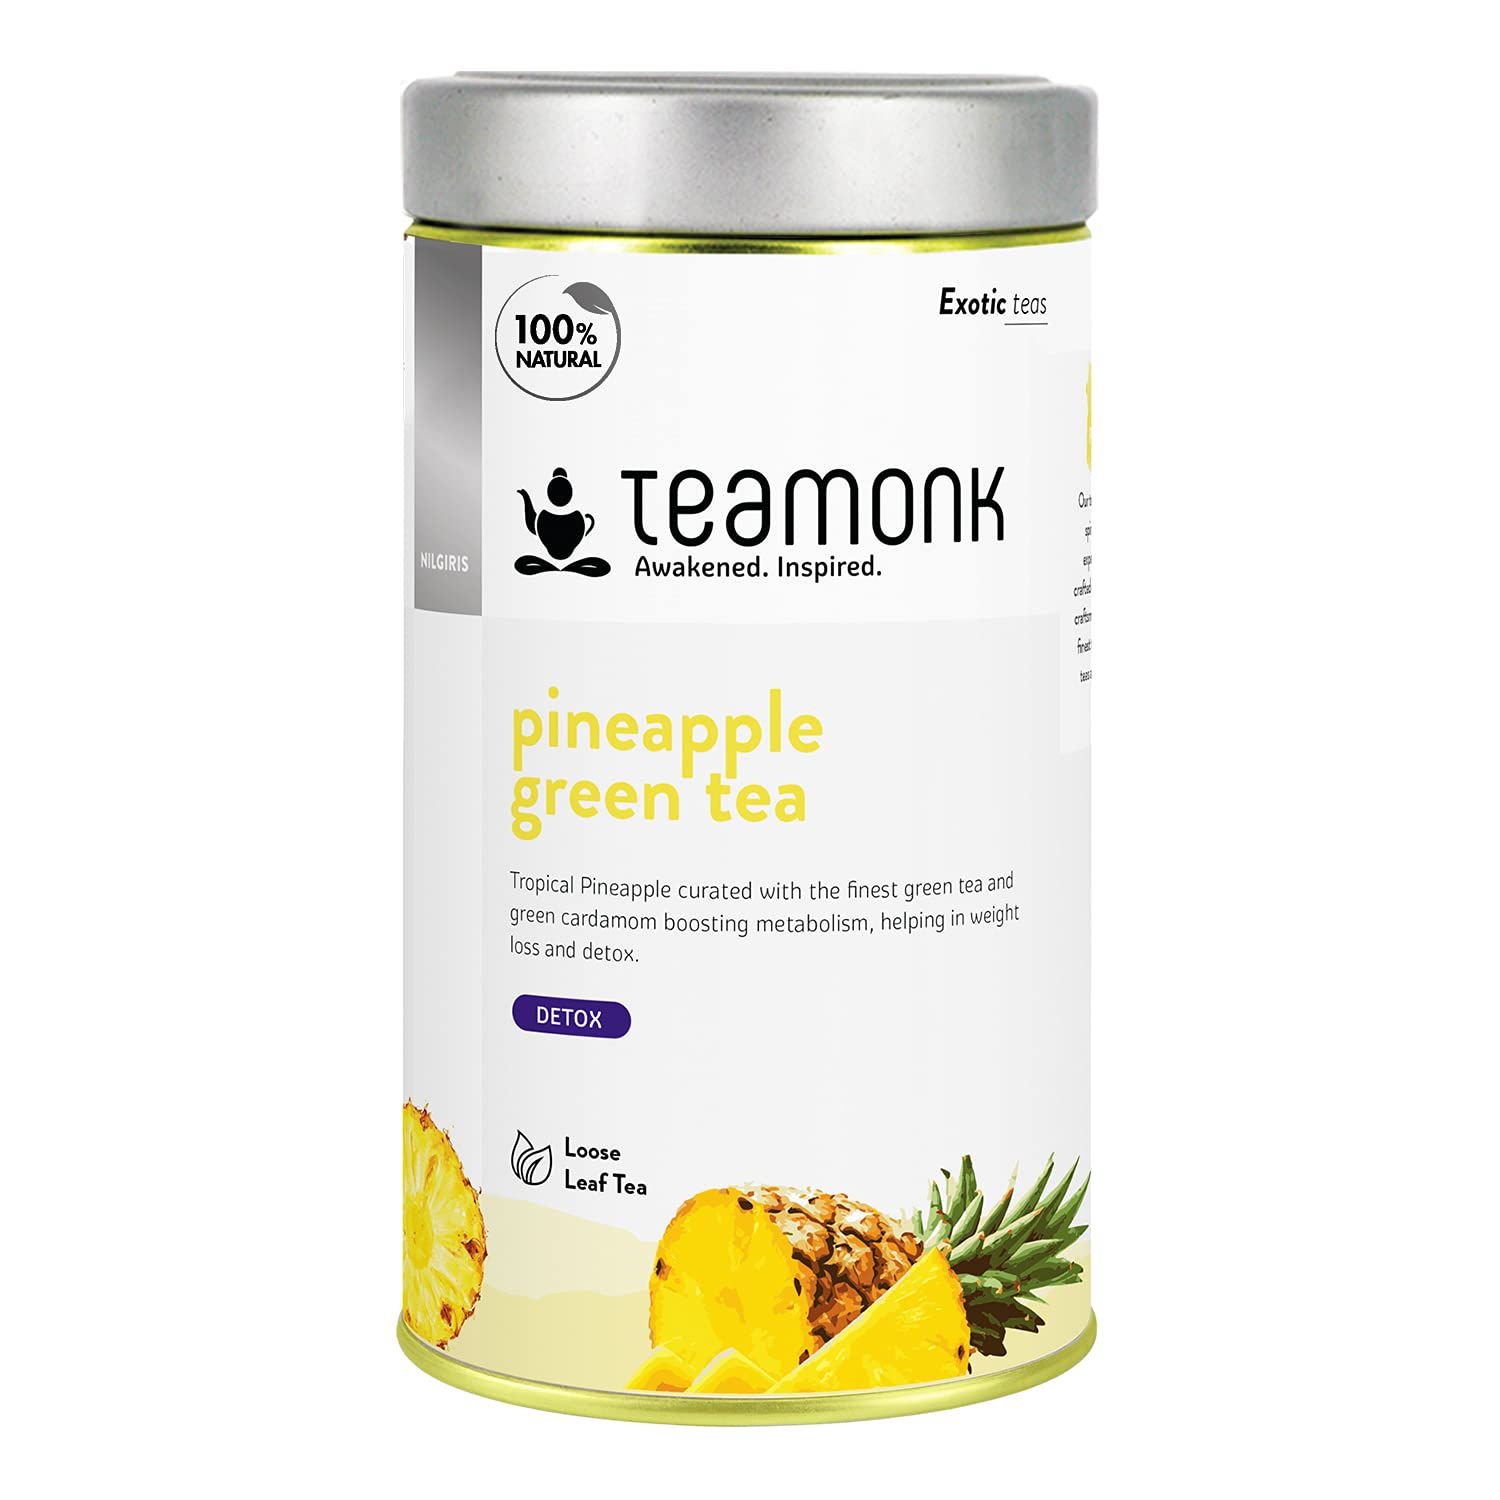 Teamonk Pineapple Green Tea Image